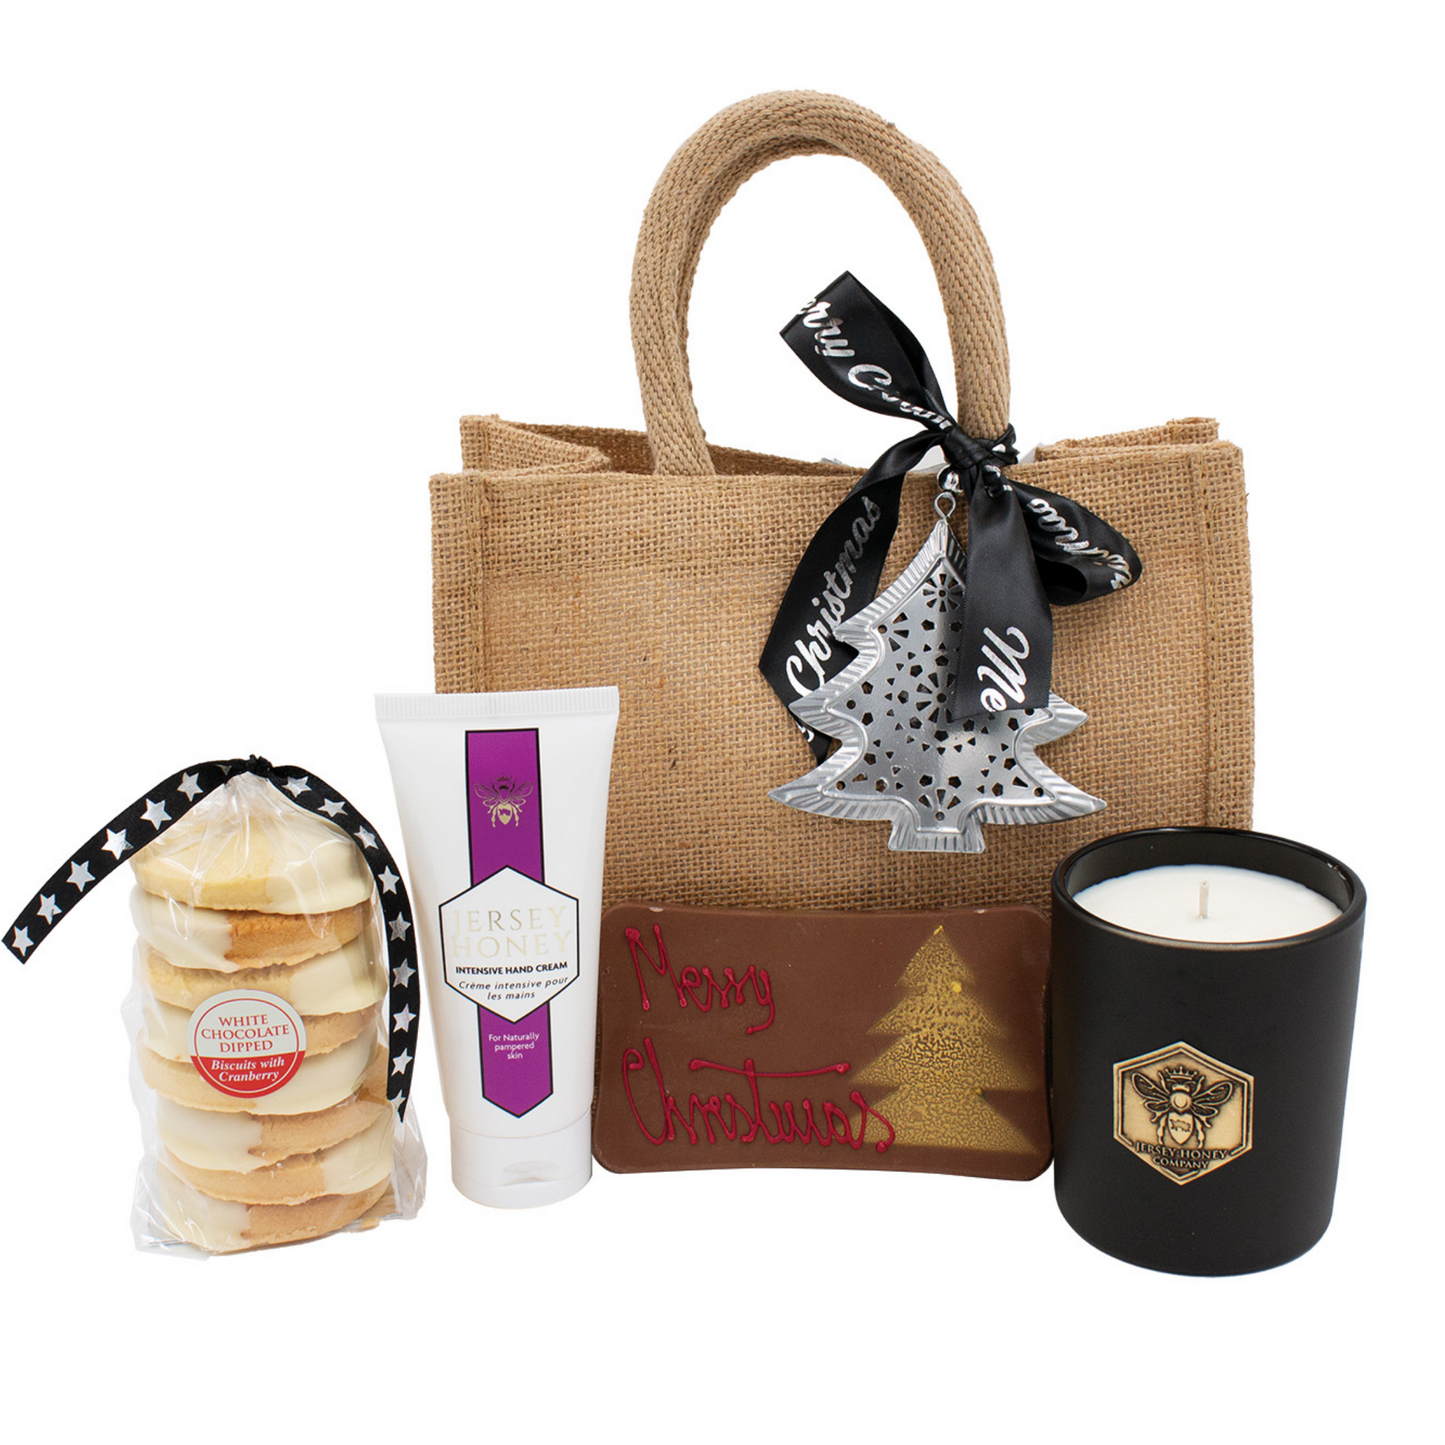 Christmas Bliss Gift Bag 2023 - Jersey